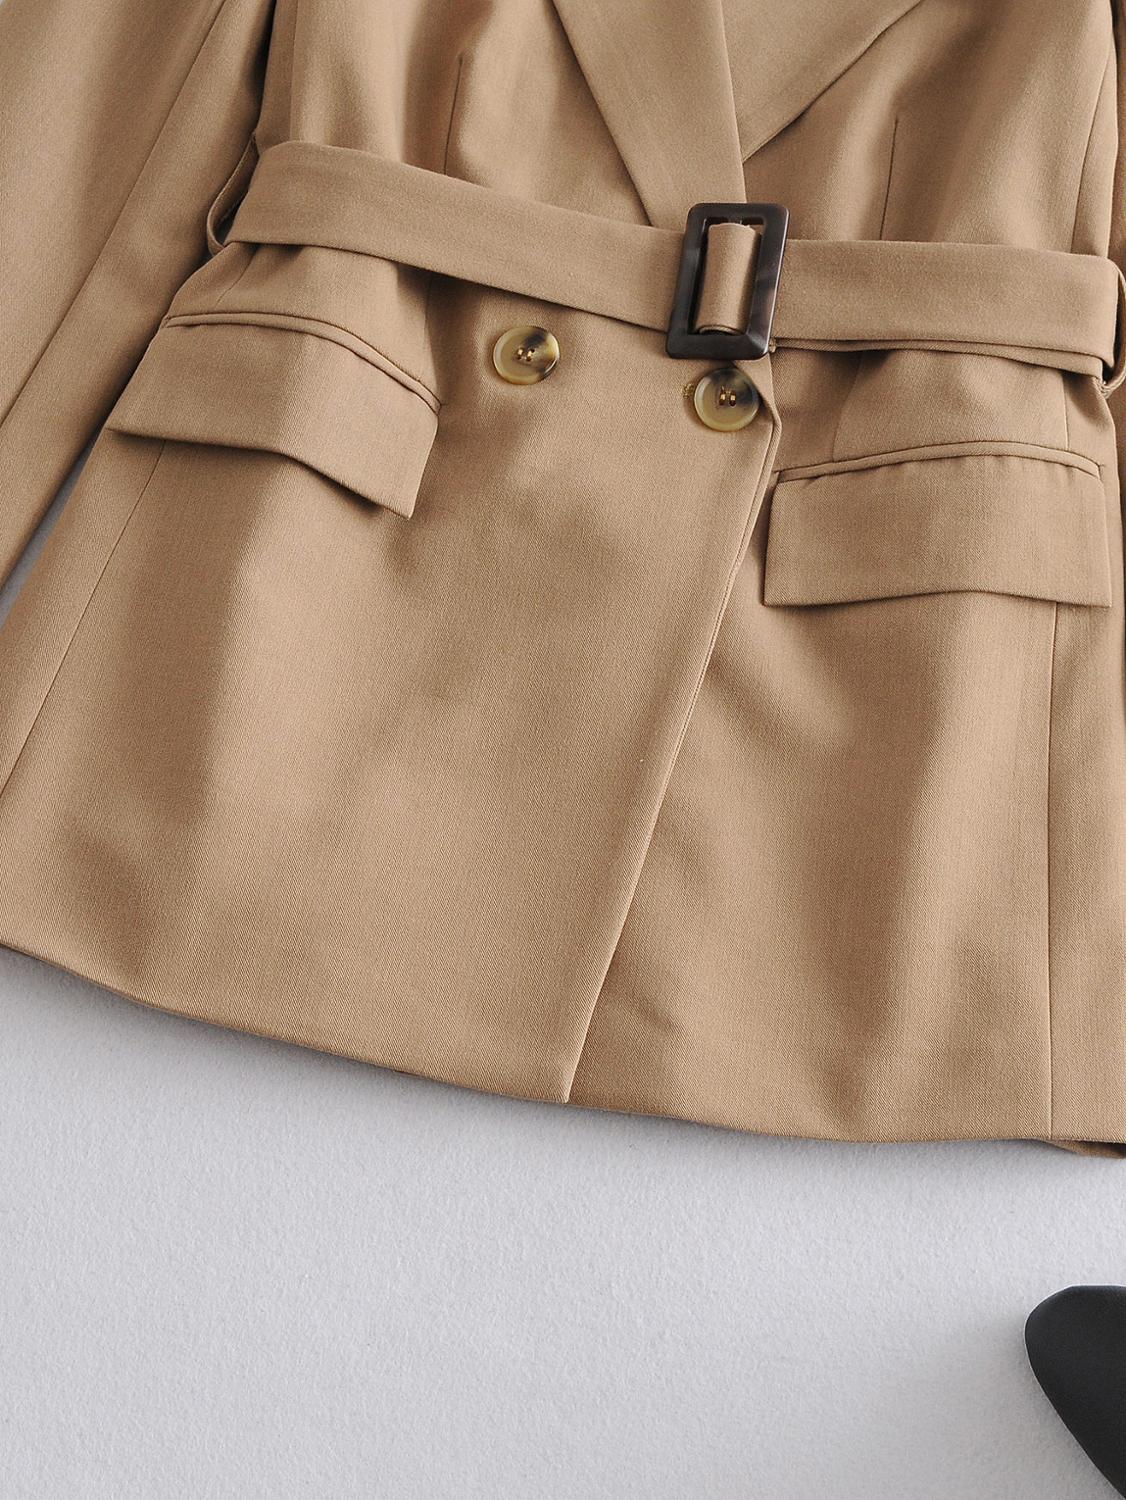 Toppeis women's belt jacket blazer ladies long blazer solid color suit autumn coat 2020 women outwear